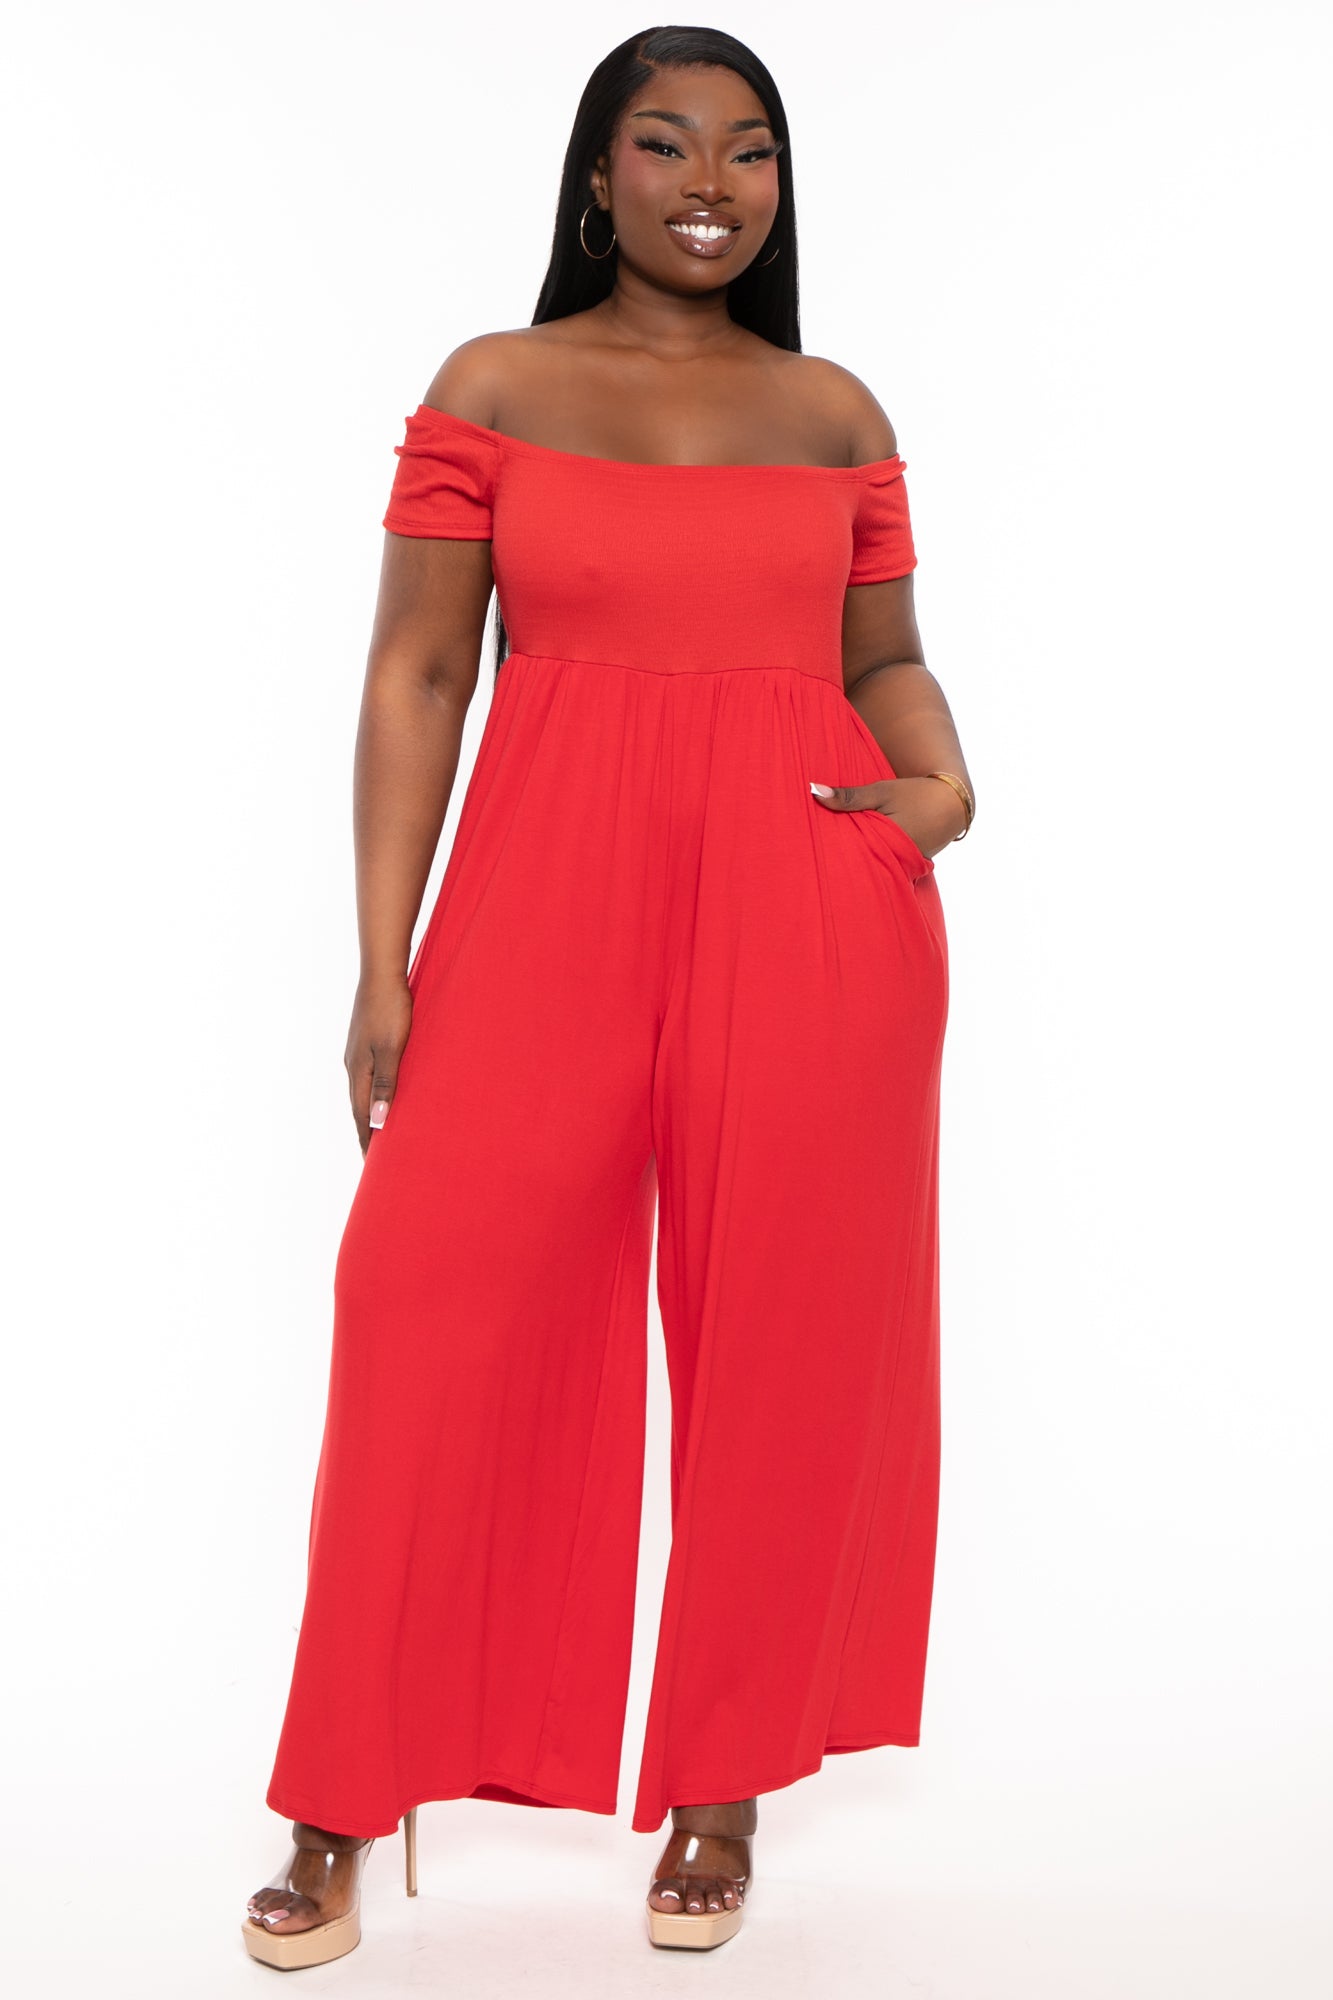 AVENUE | Women's Plus Size Callie Top - red - 26W/28W